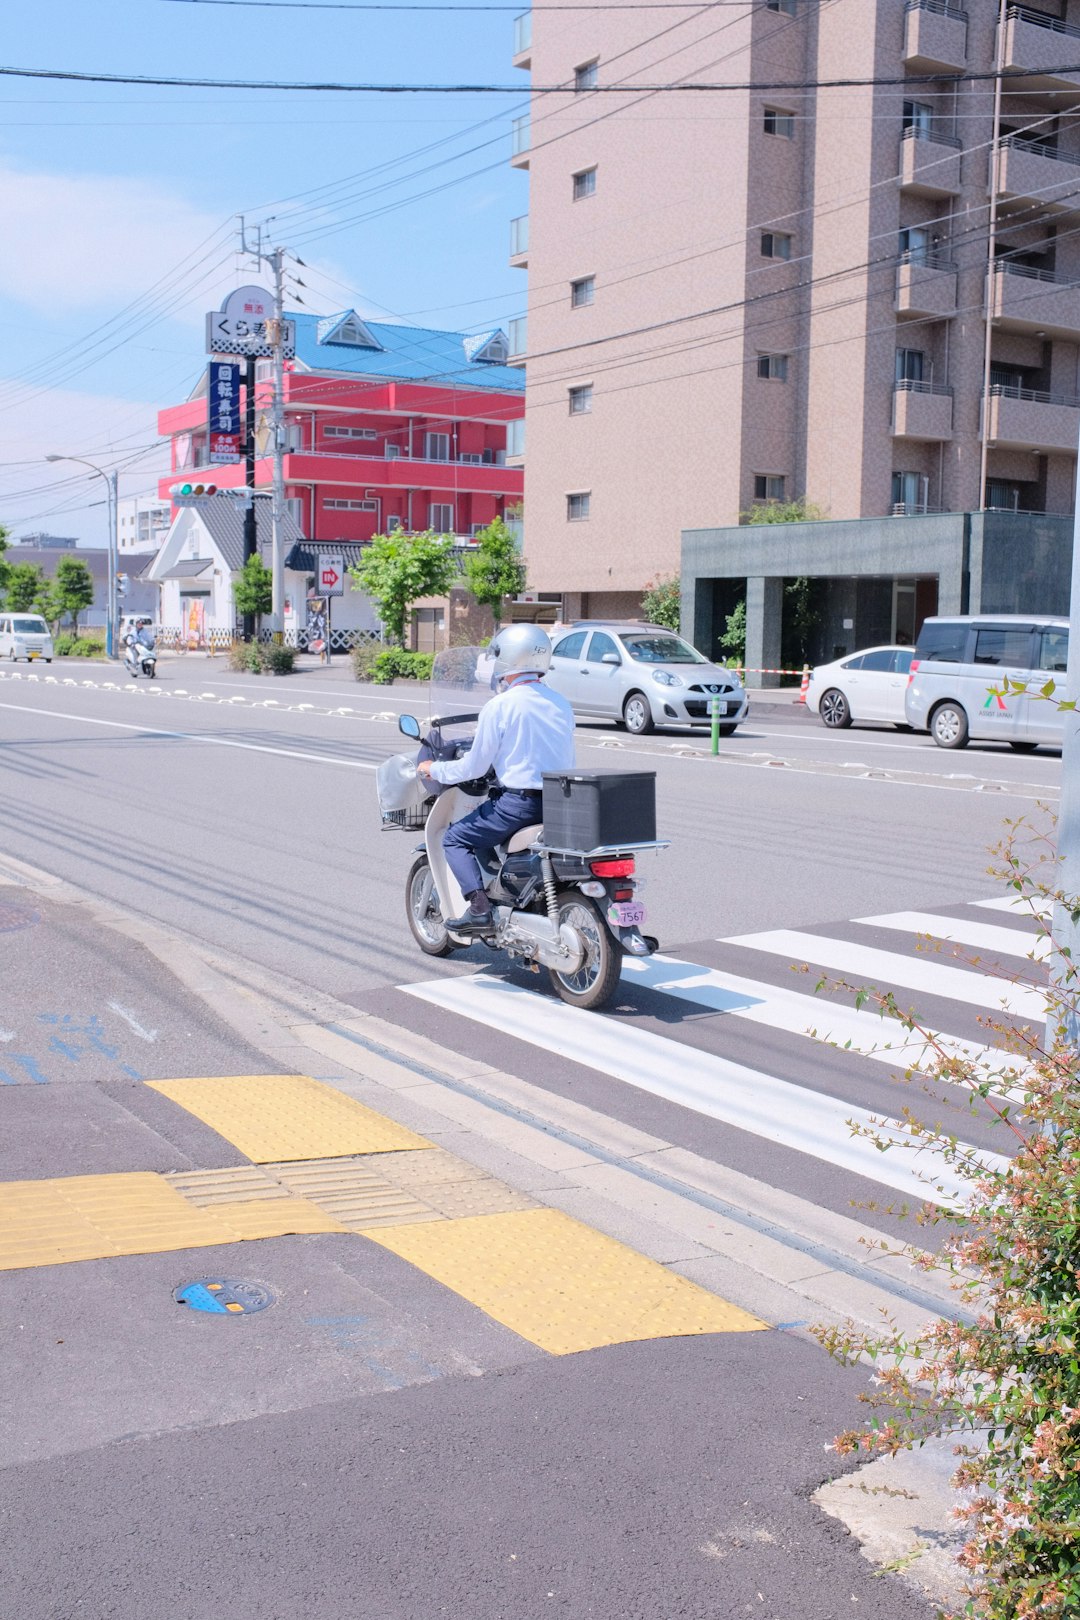 man in white shirt riding motorcycle on road during daytime